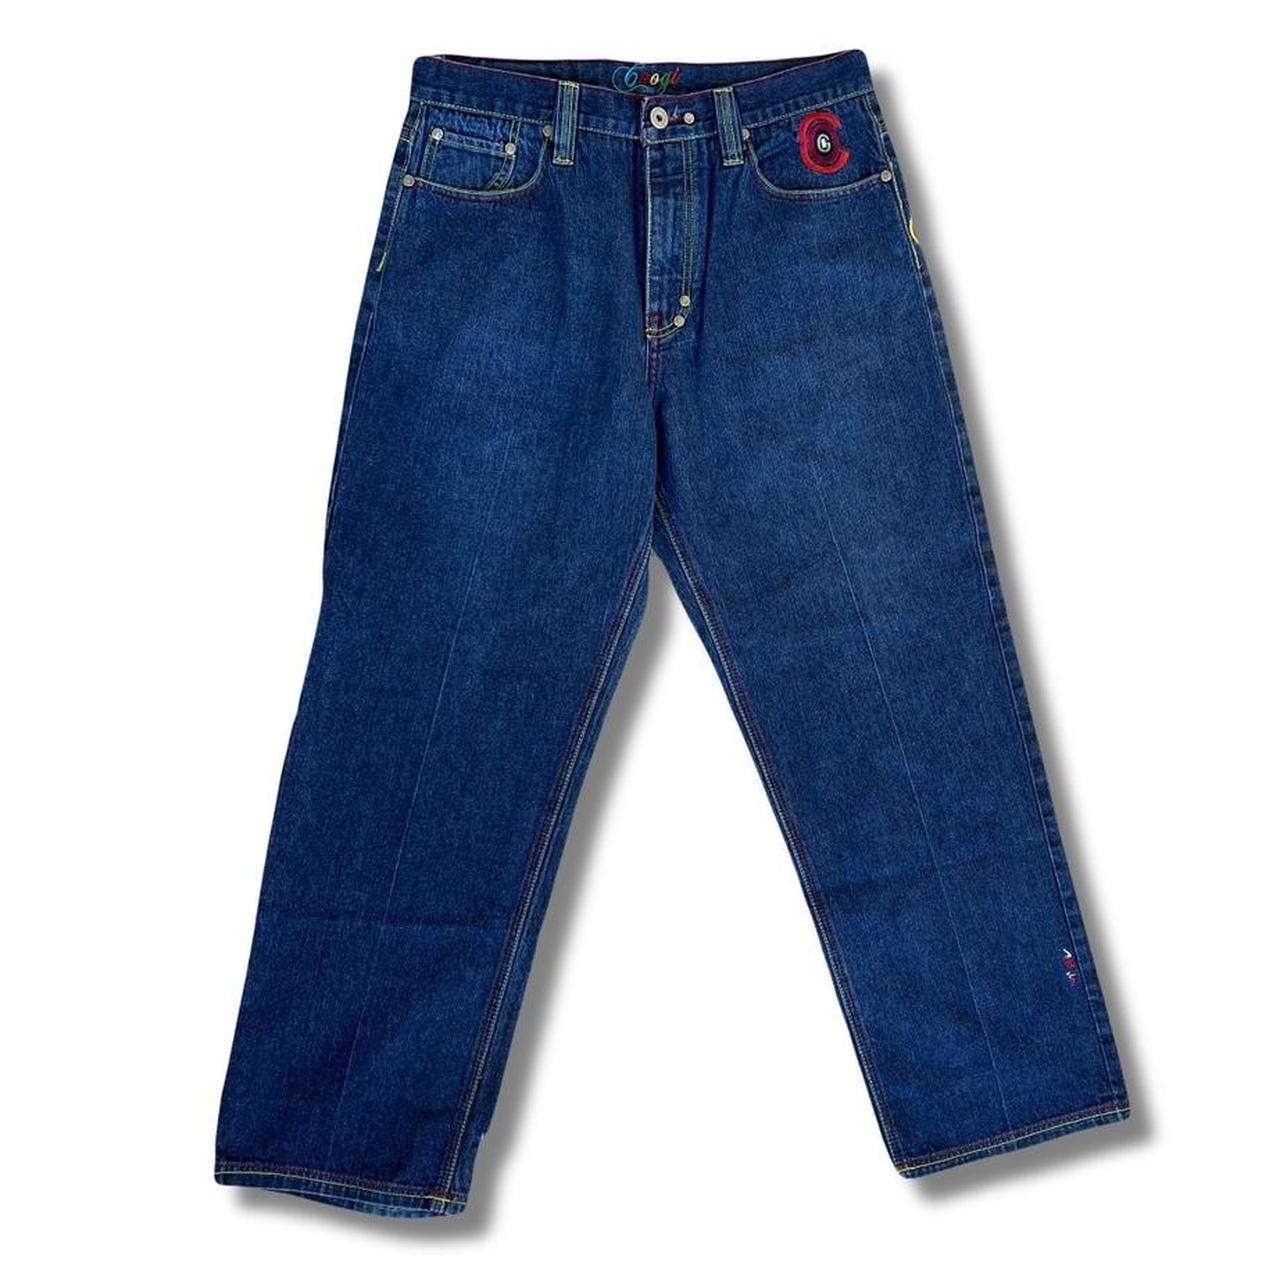 Coogi Men's Jeans (2)